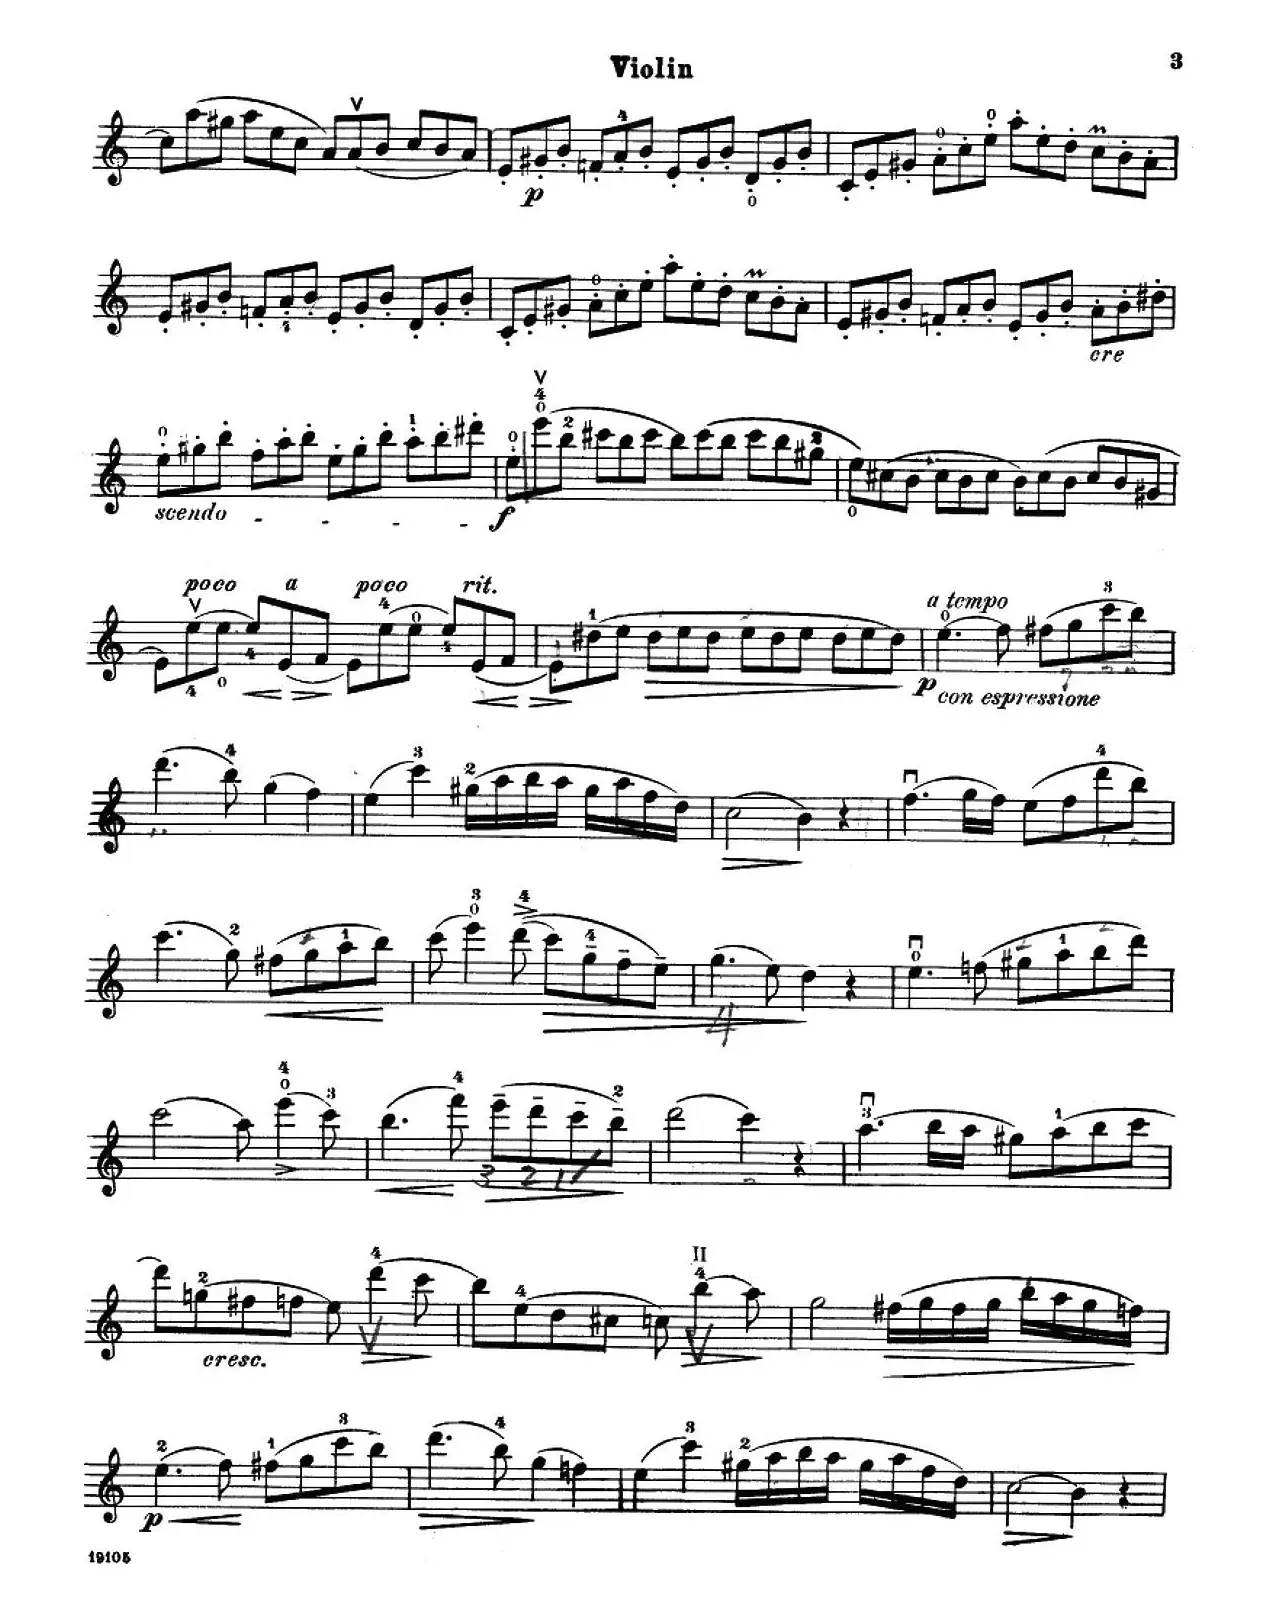 Concerto No.1 in a minor（A小调第一小提琴协奏曲）